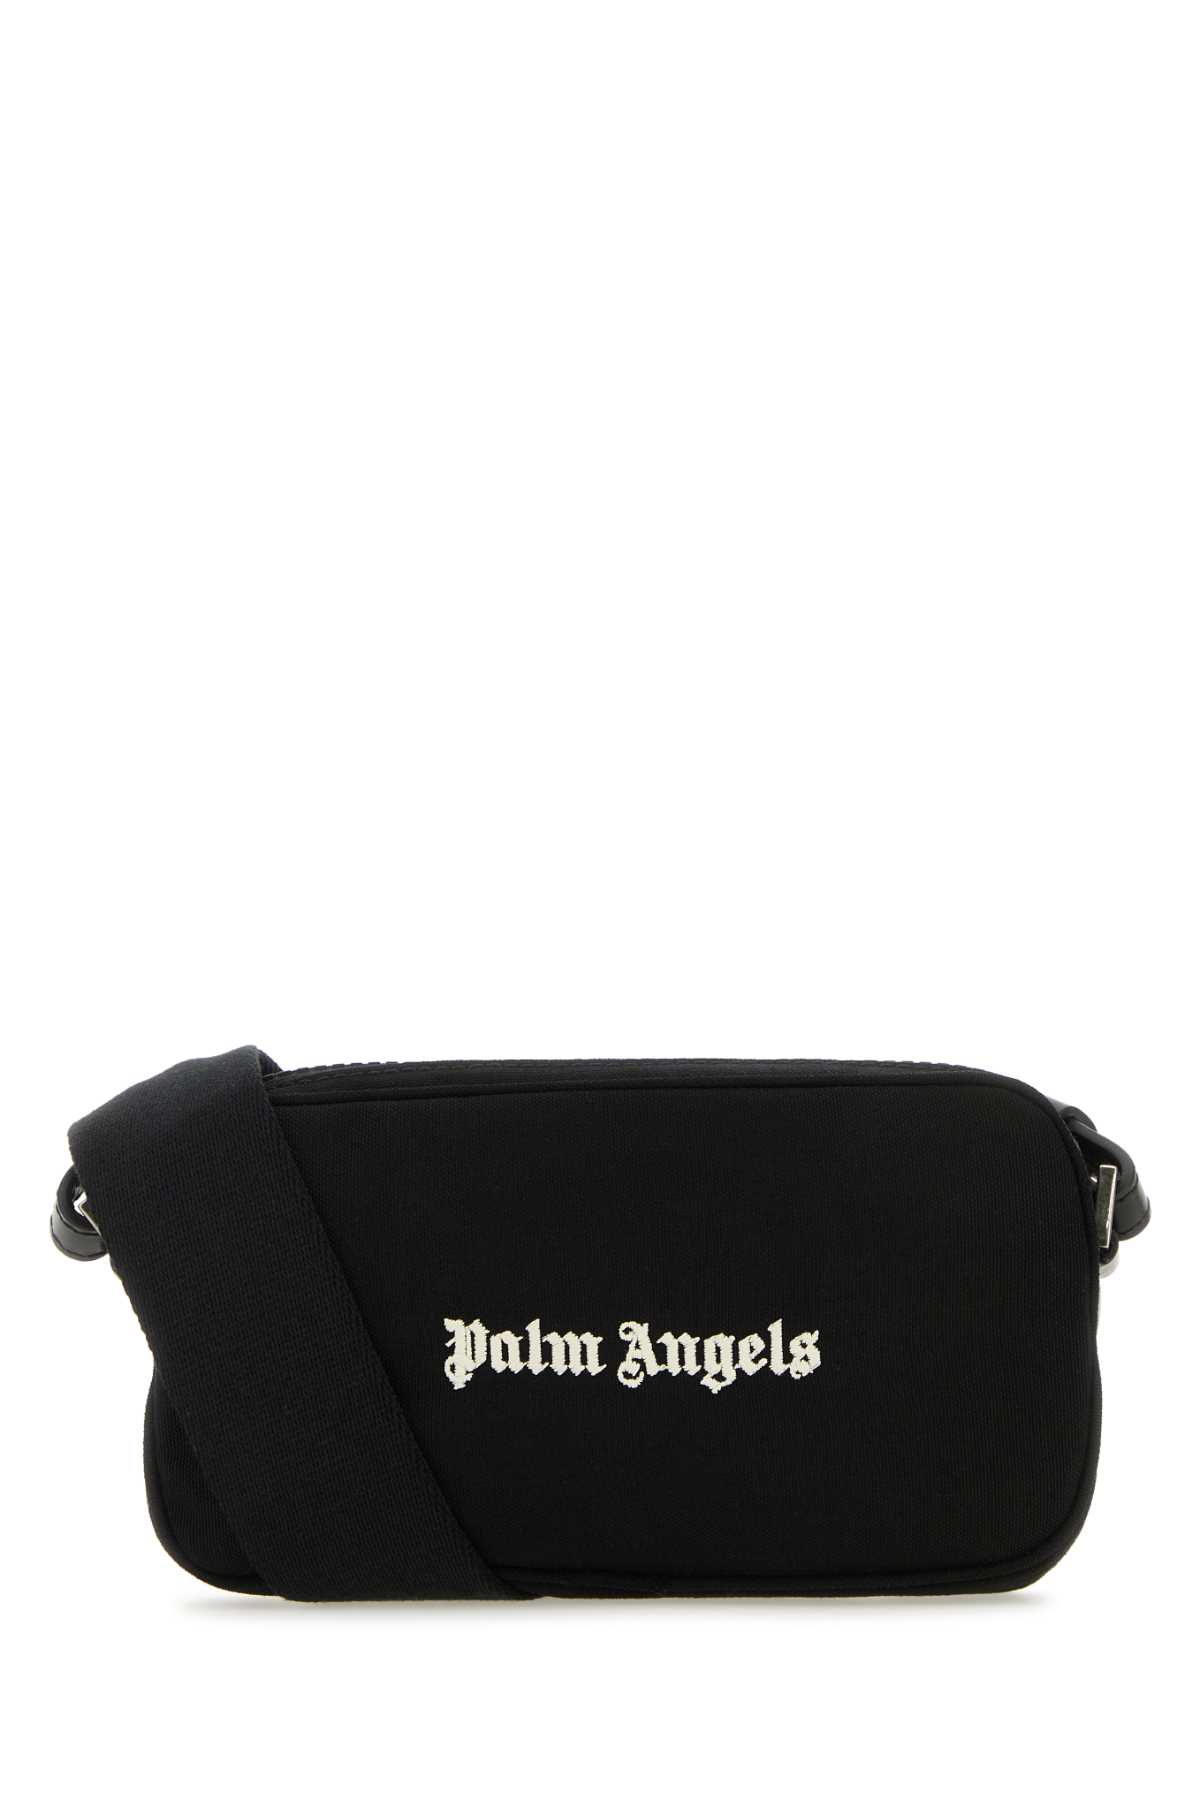 Palm Angels Black Canvas Crossbody Bag